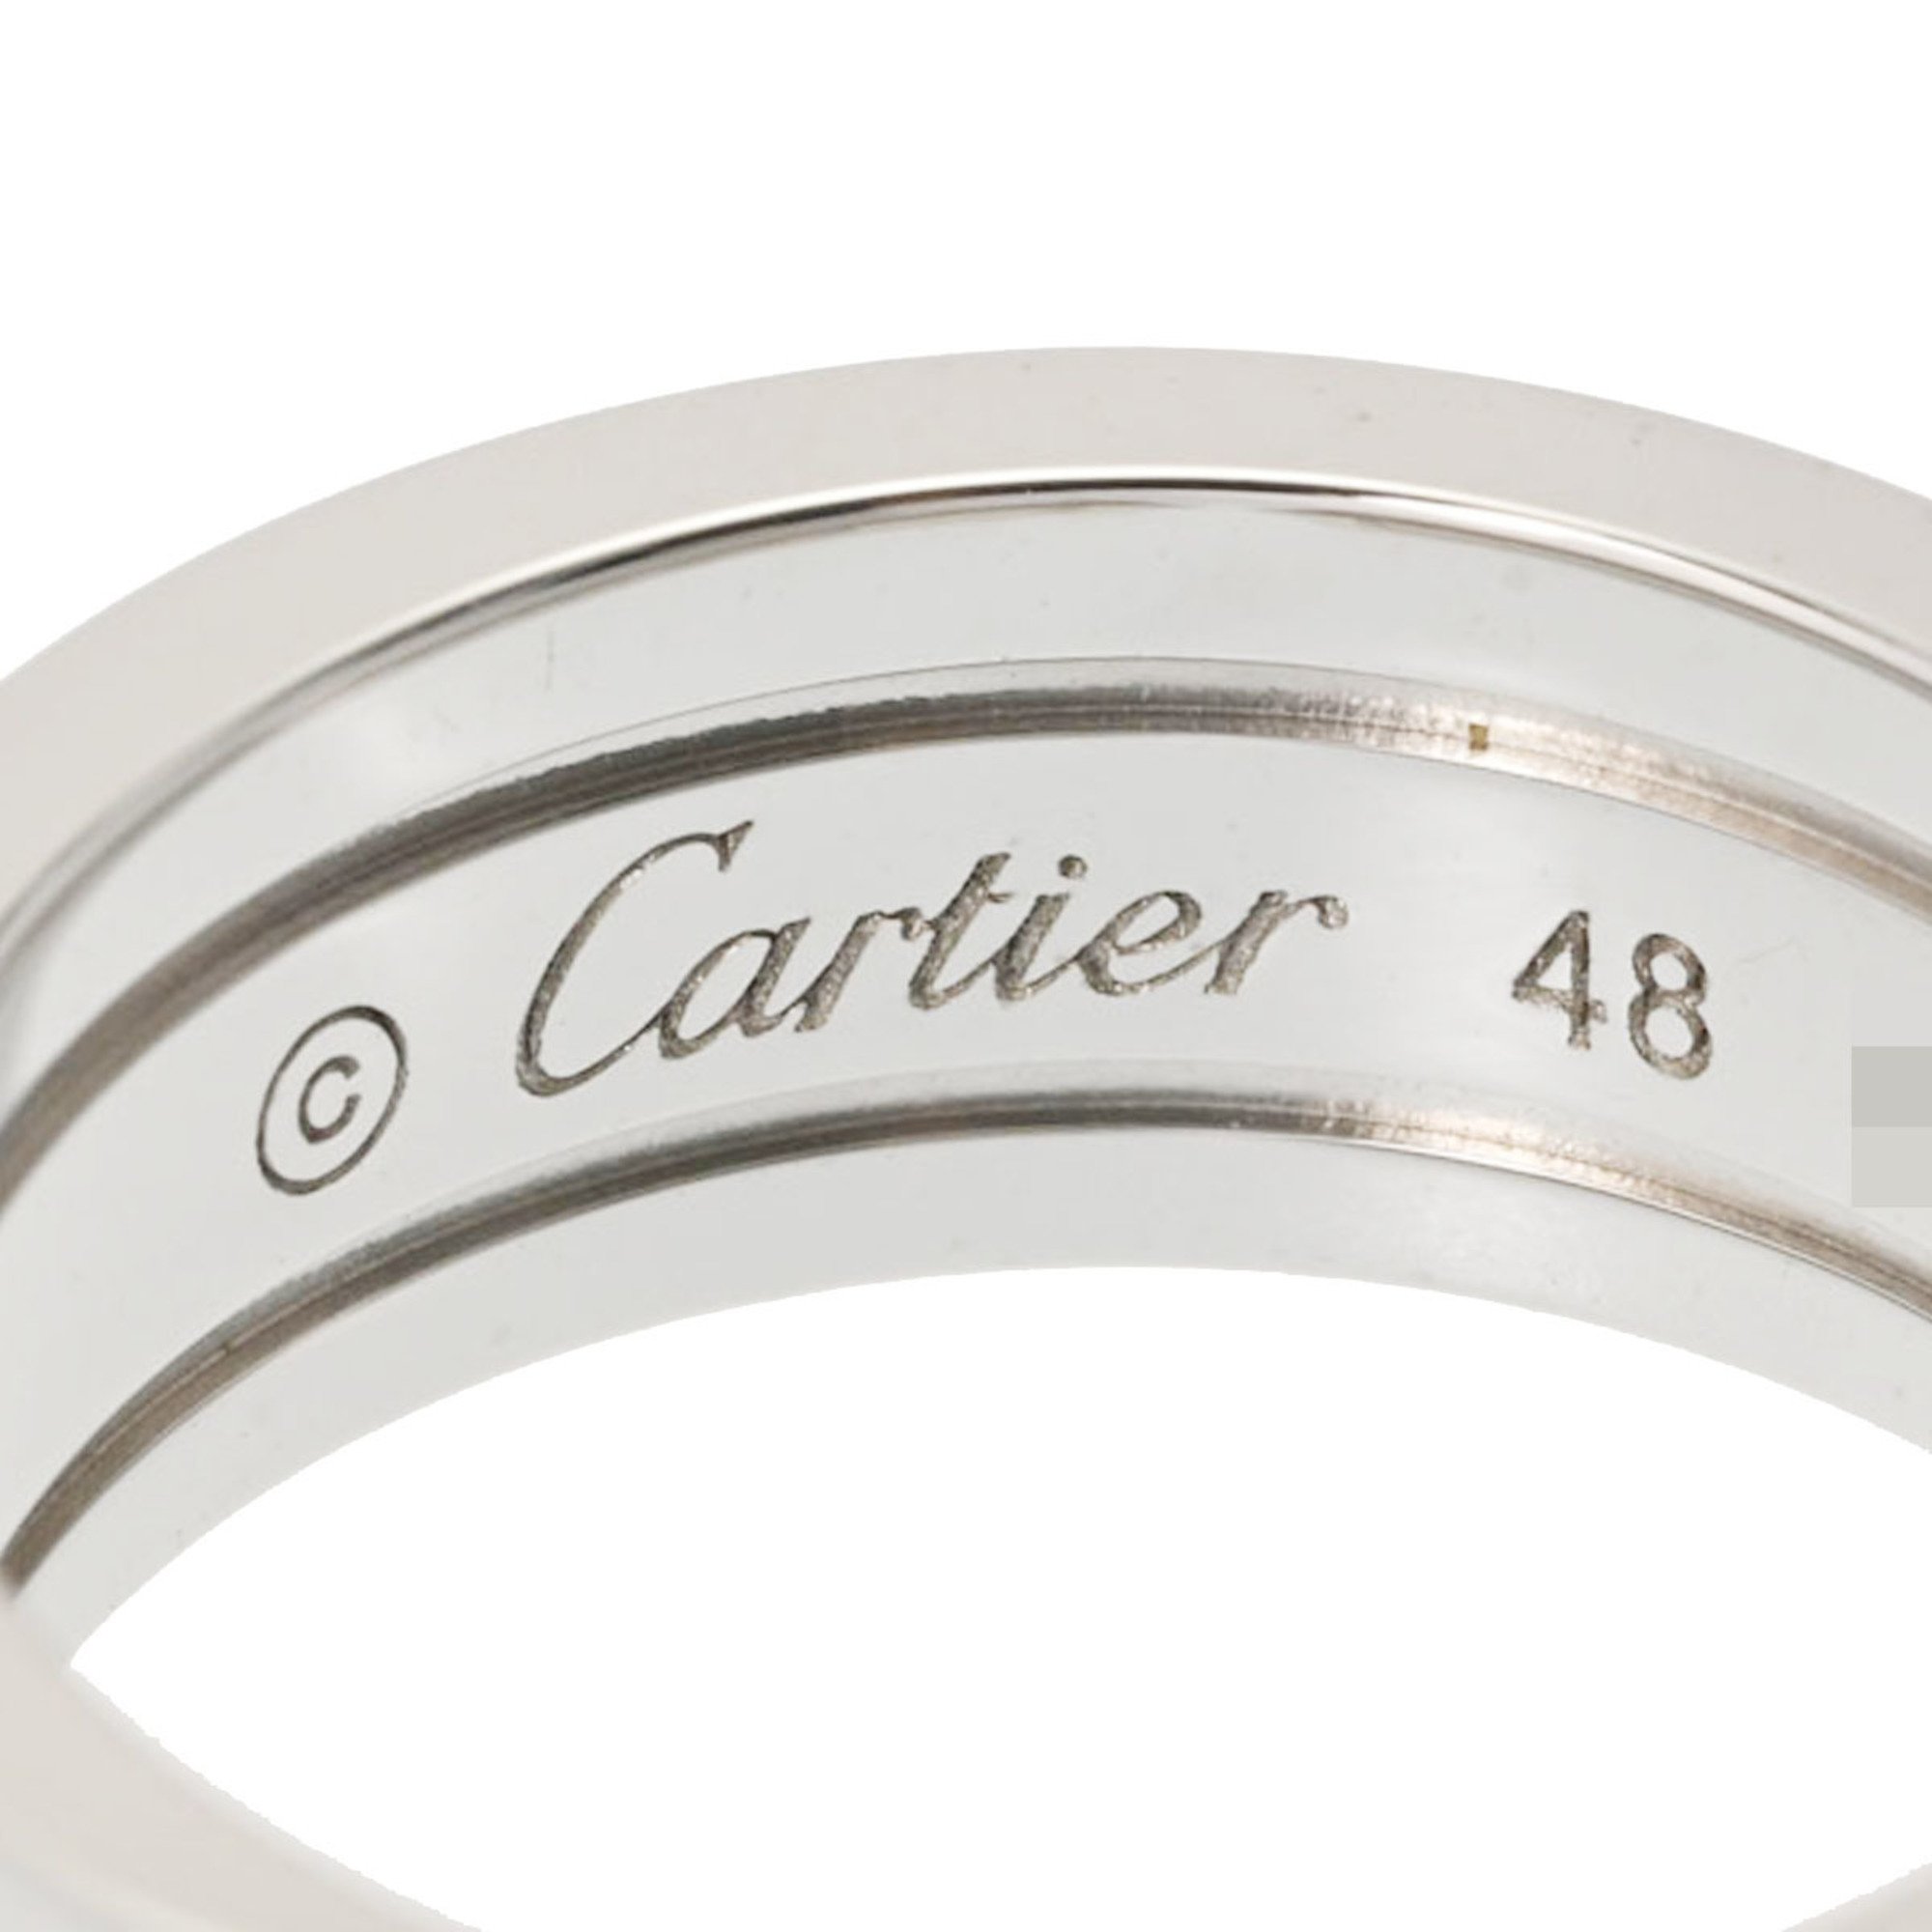 CARTIER Cartier C2 #48 - No. 8 Women's K18 White Gold Ring